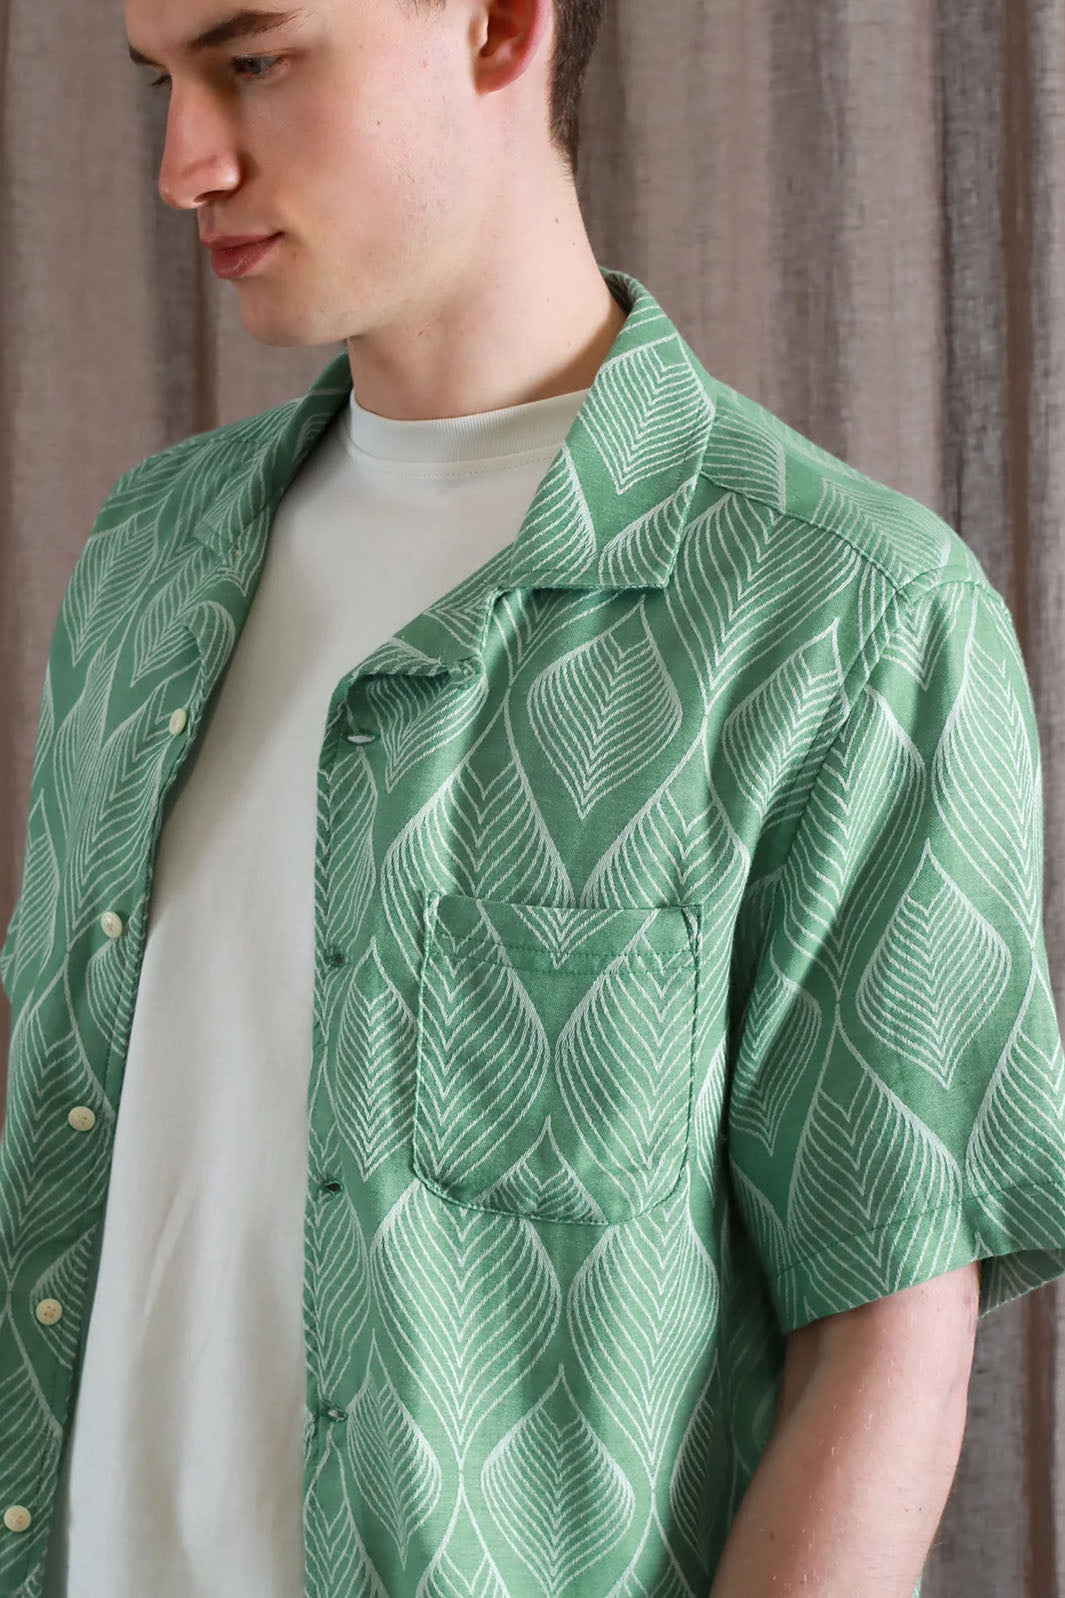 Stachio Shirt - Frosty Green Leaf Jacquard